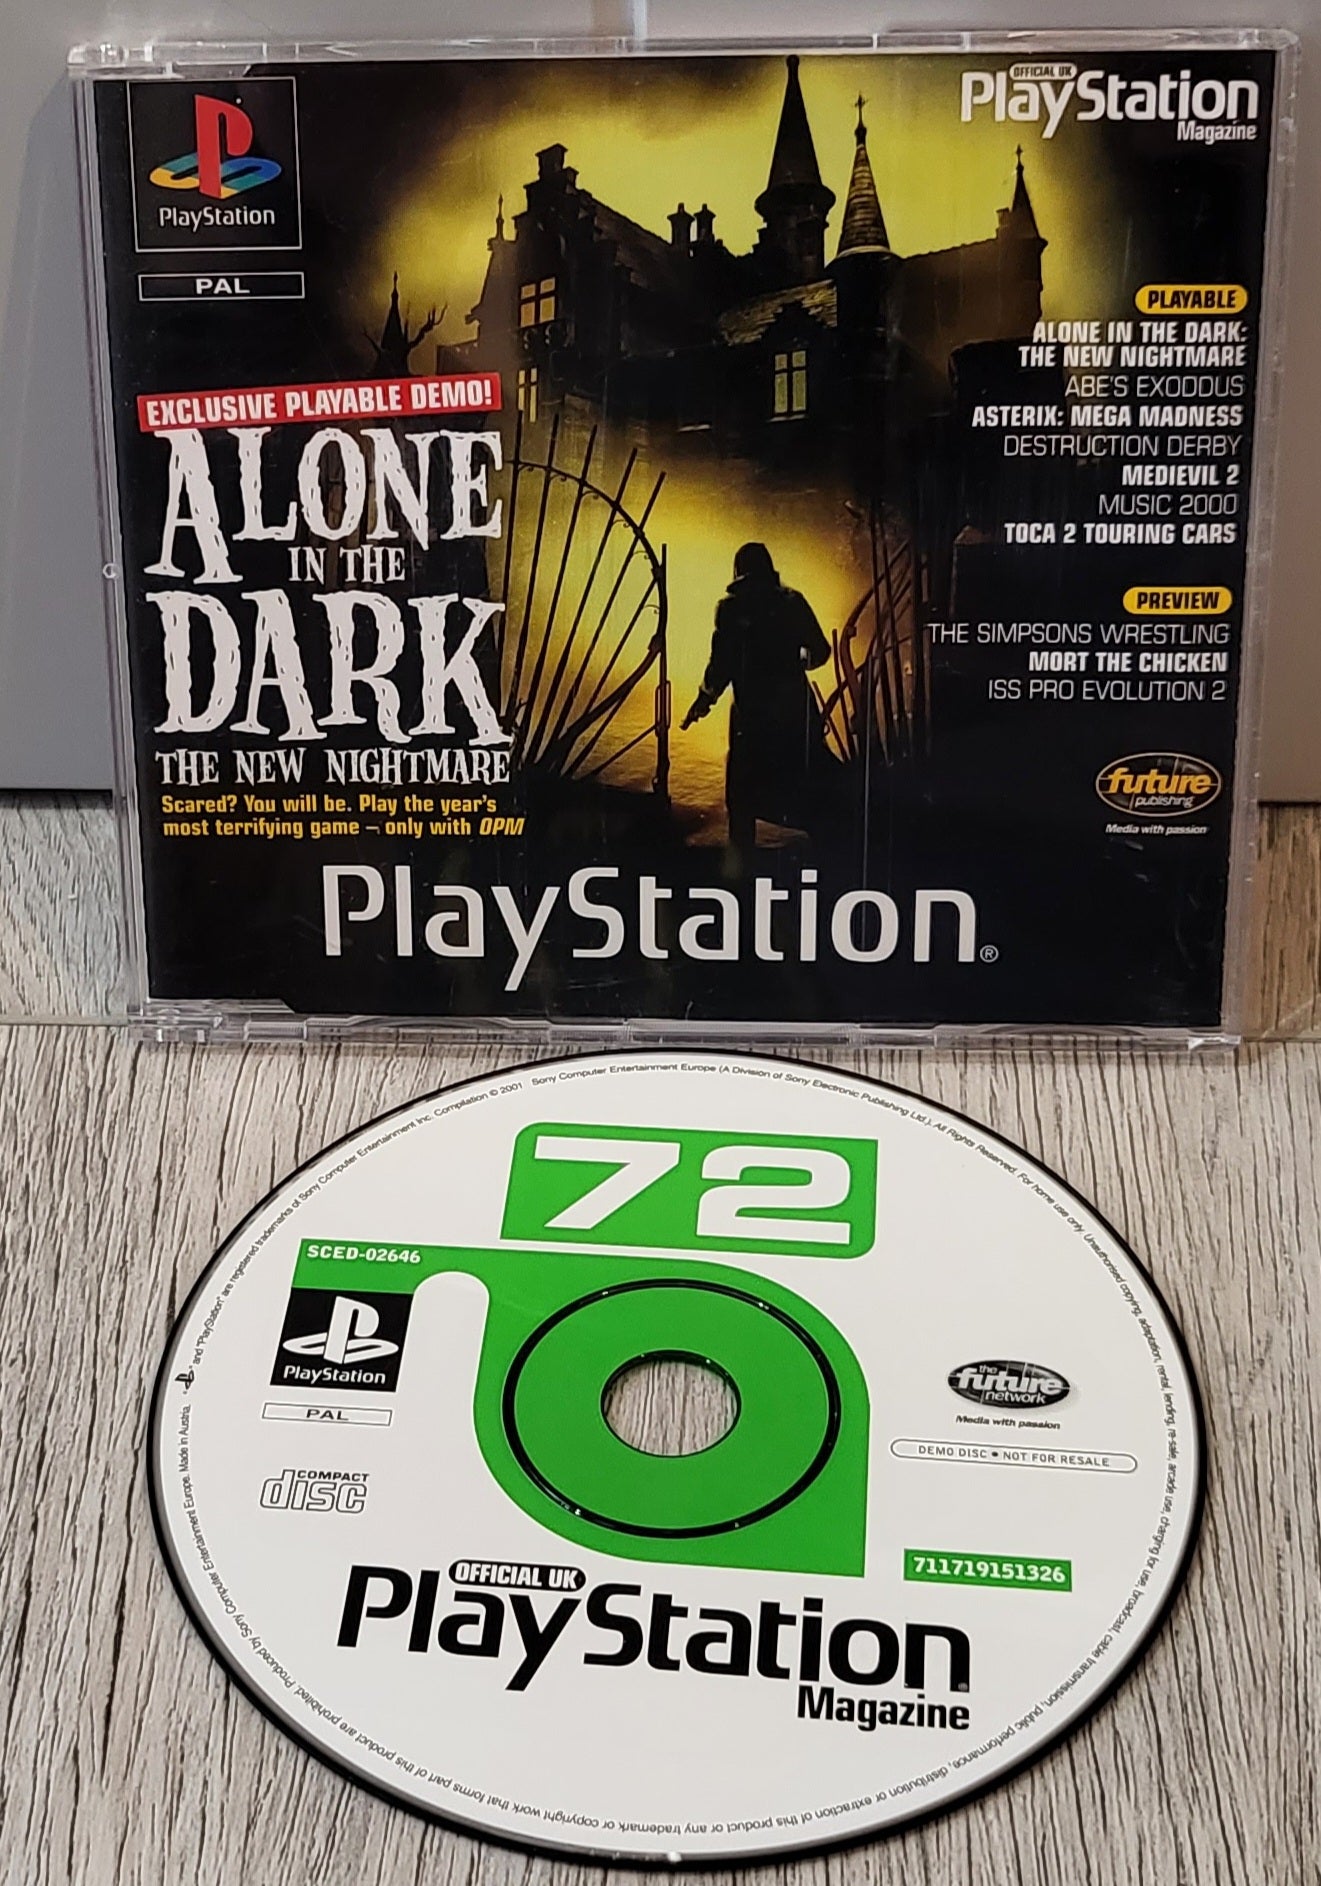 Sony Playstation 1 (PS1) Magazine Demo Disc 72